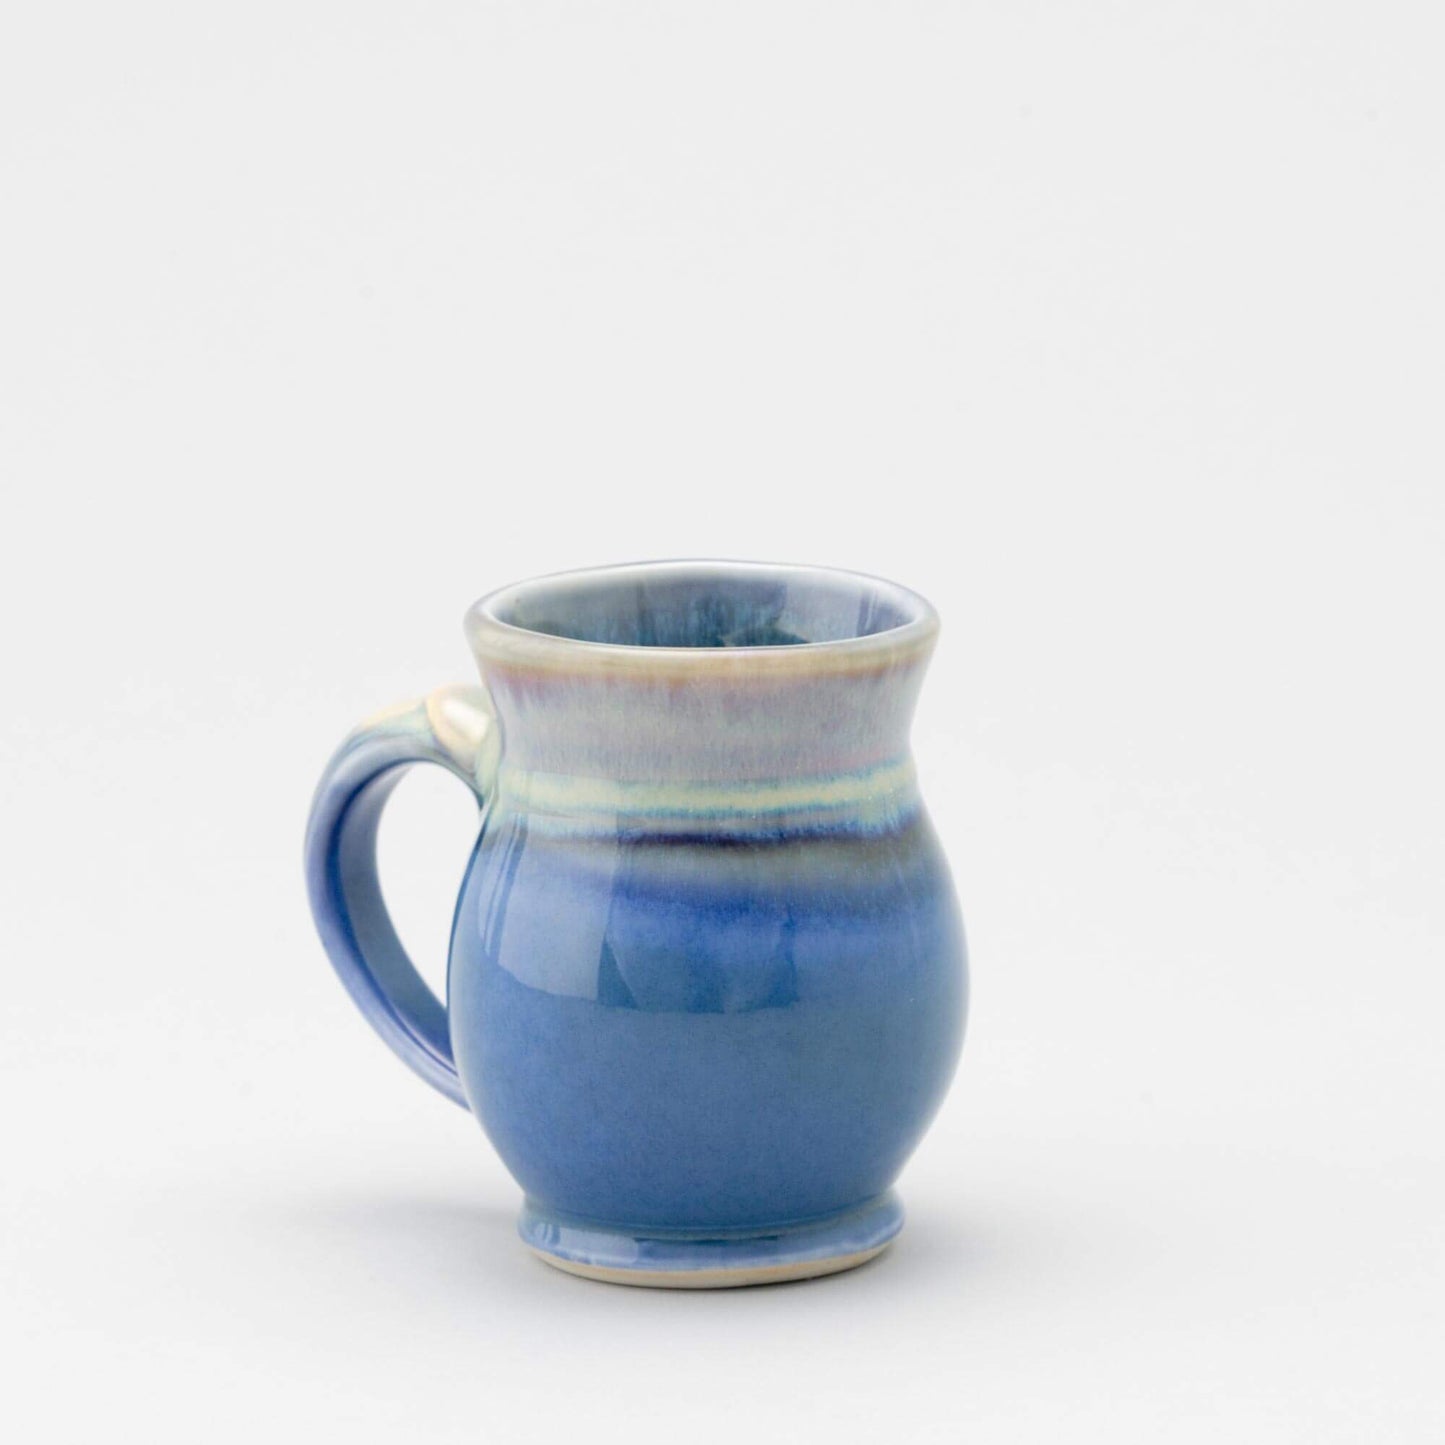 Handmade Pottery Curvy Mug made by Georgetown Pottery in Maine Blue Oribe